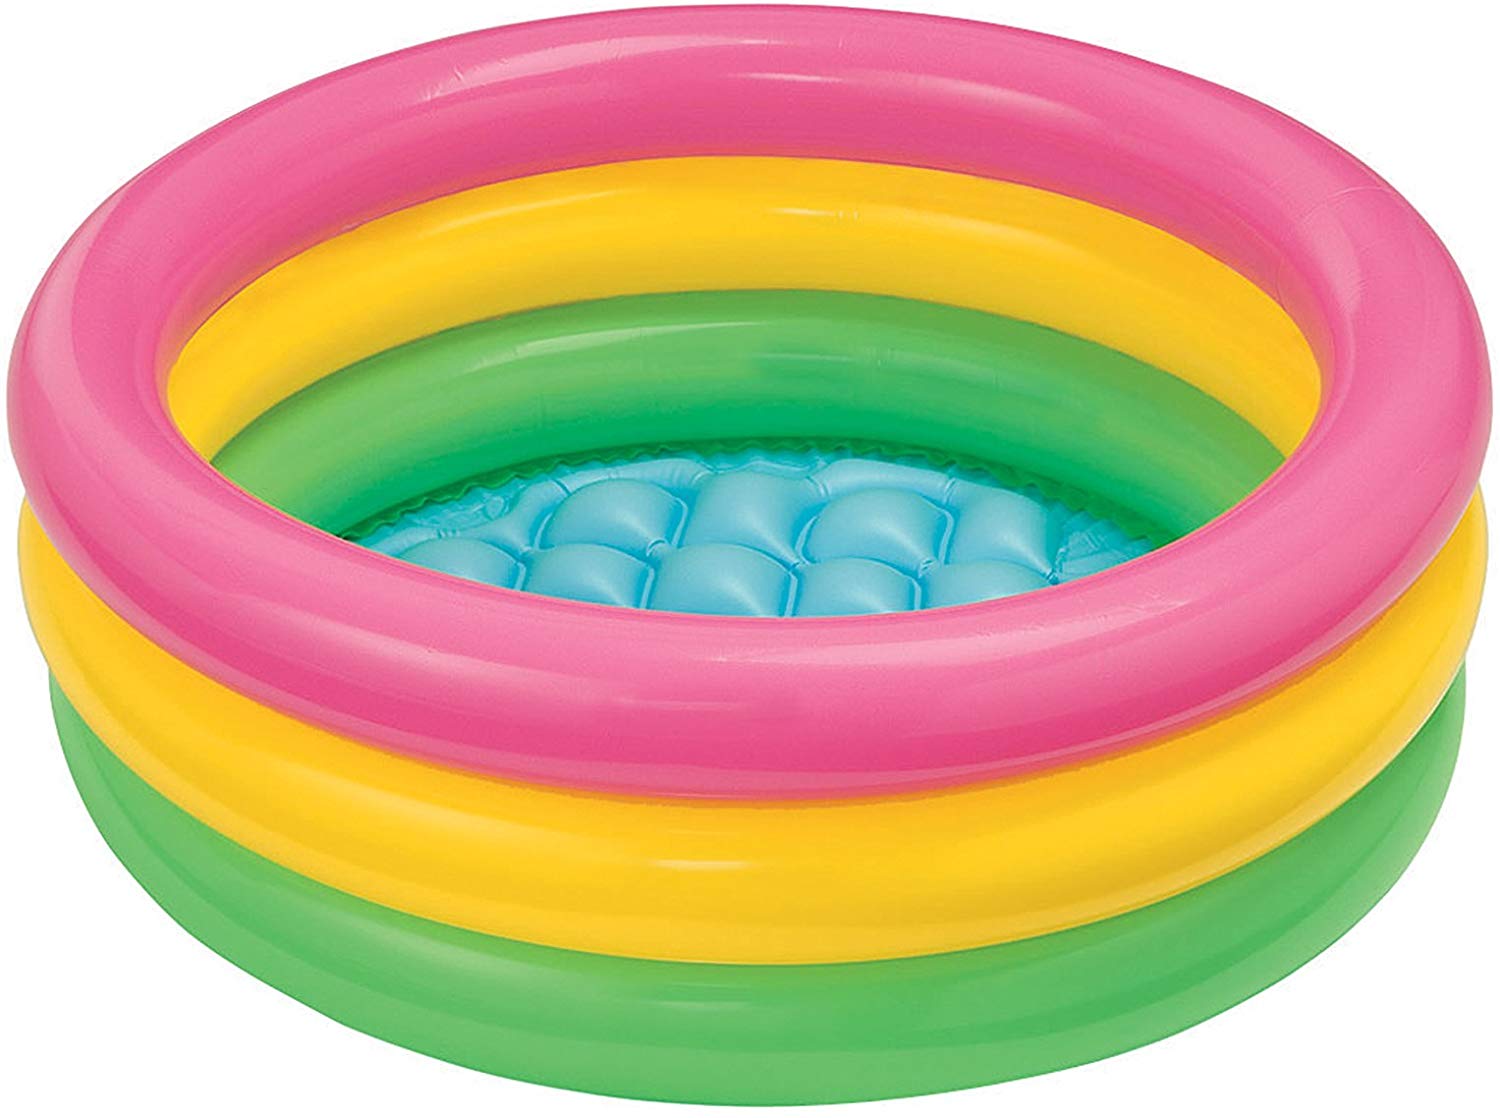 BabySPA Intex 3 Ring Pool (45 x 10 inch)